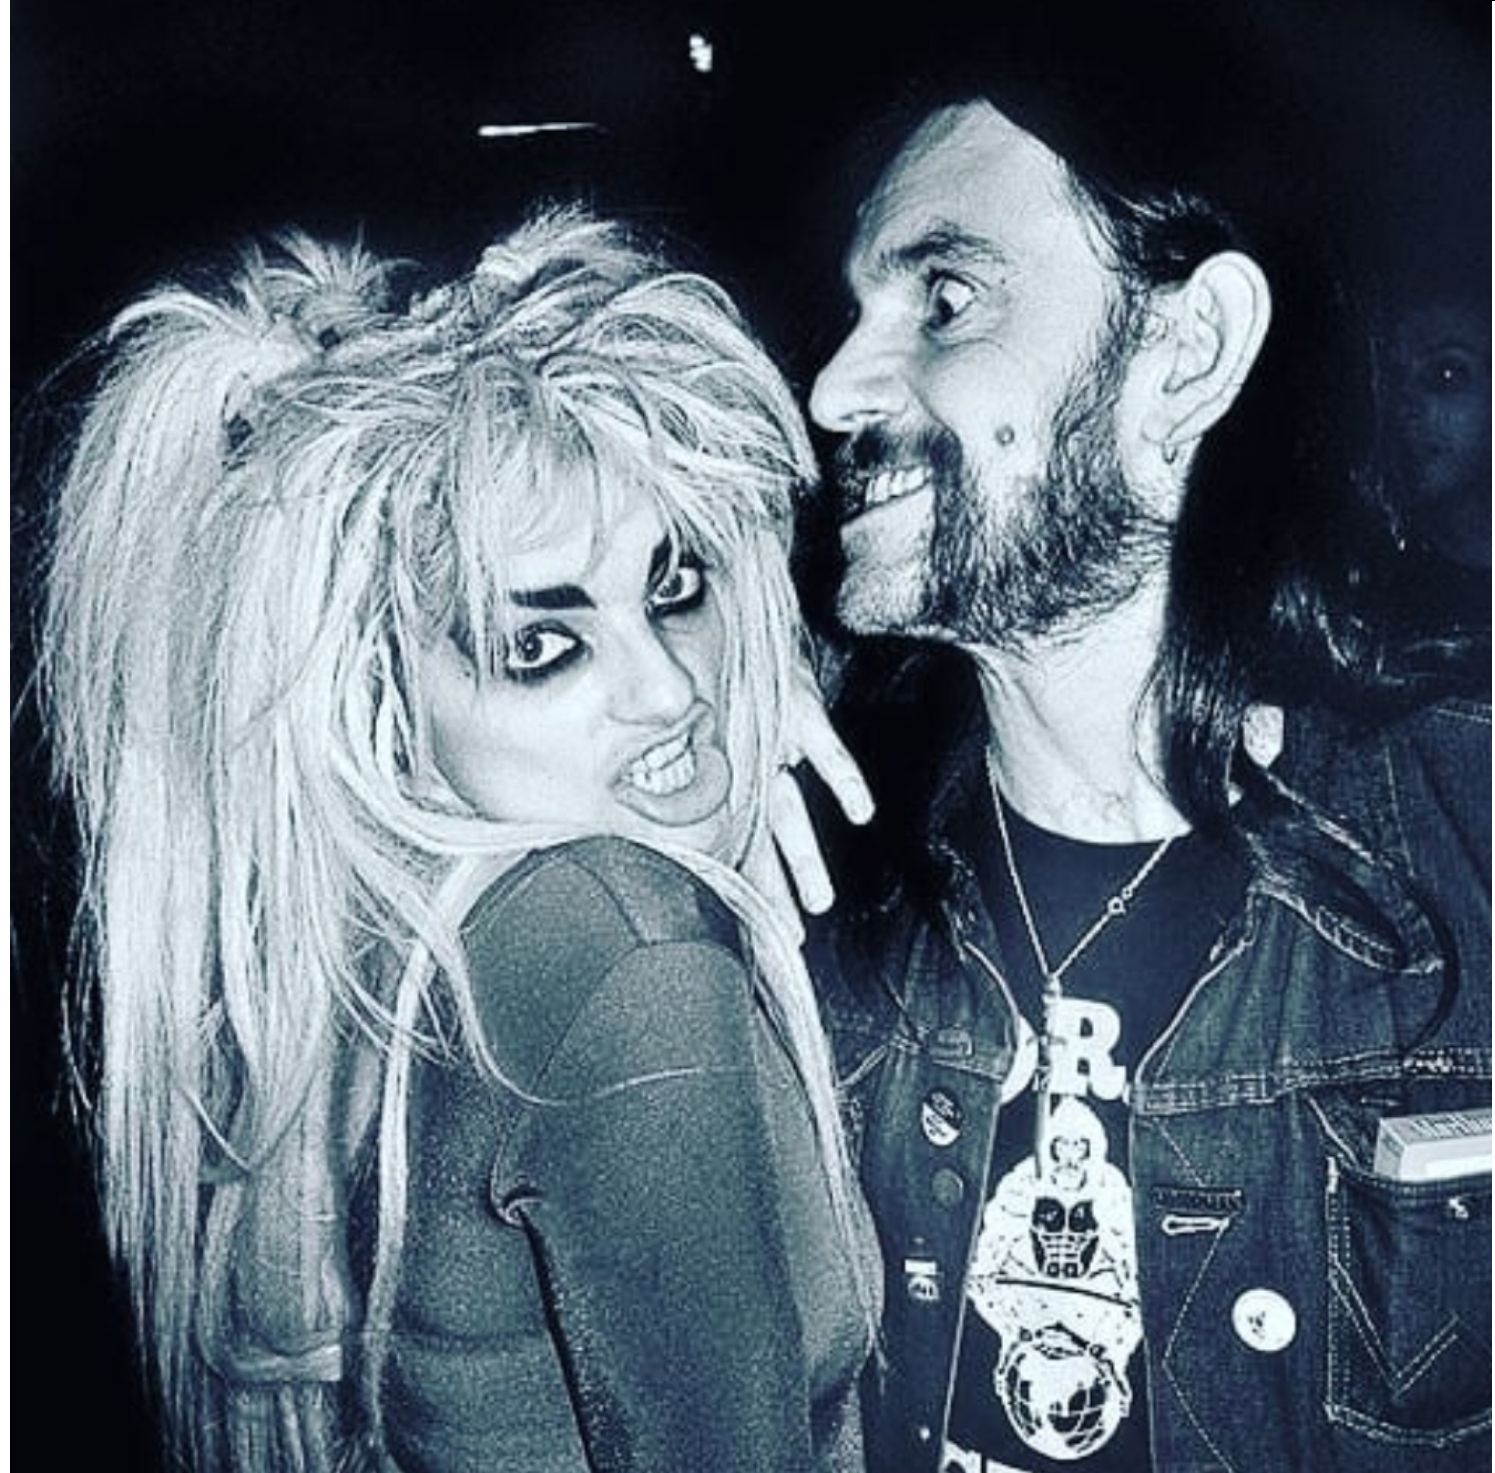 Lemmy and Nina Hagen 1989.JPG